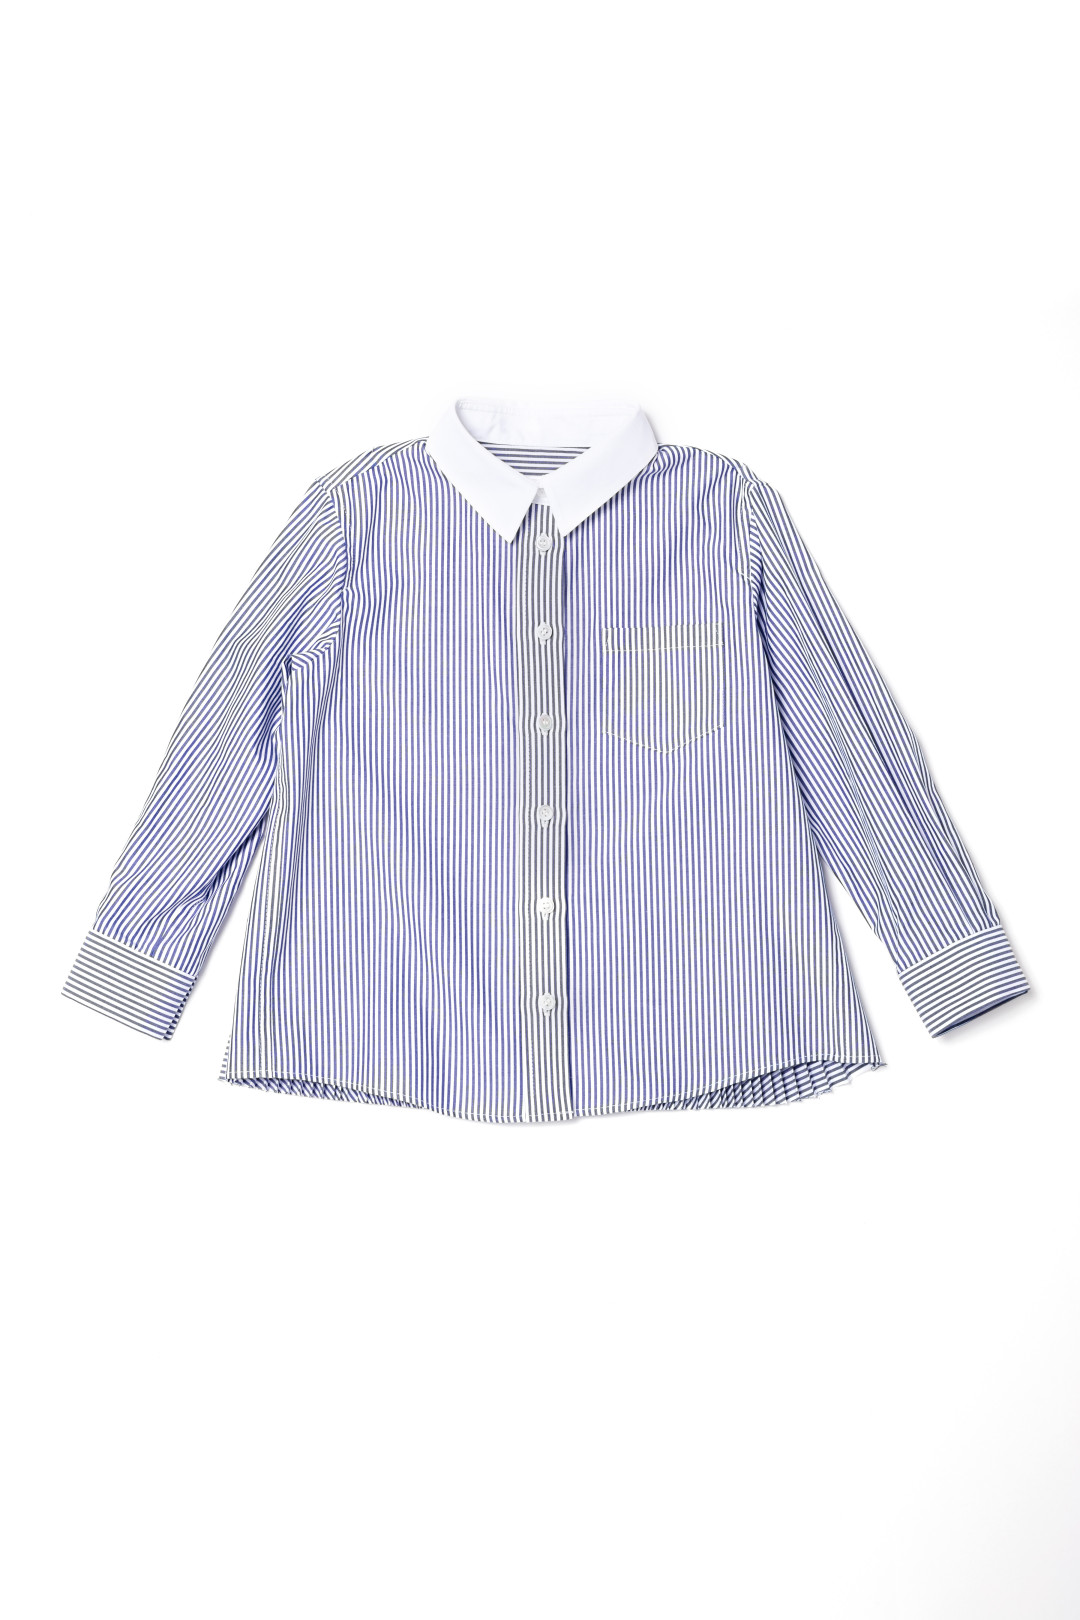 Shirt 17-00019K/Stripe 2万5,000円